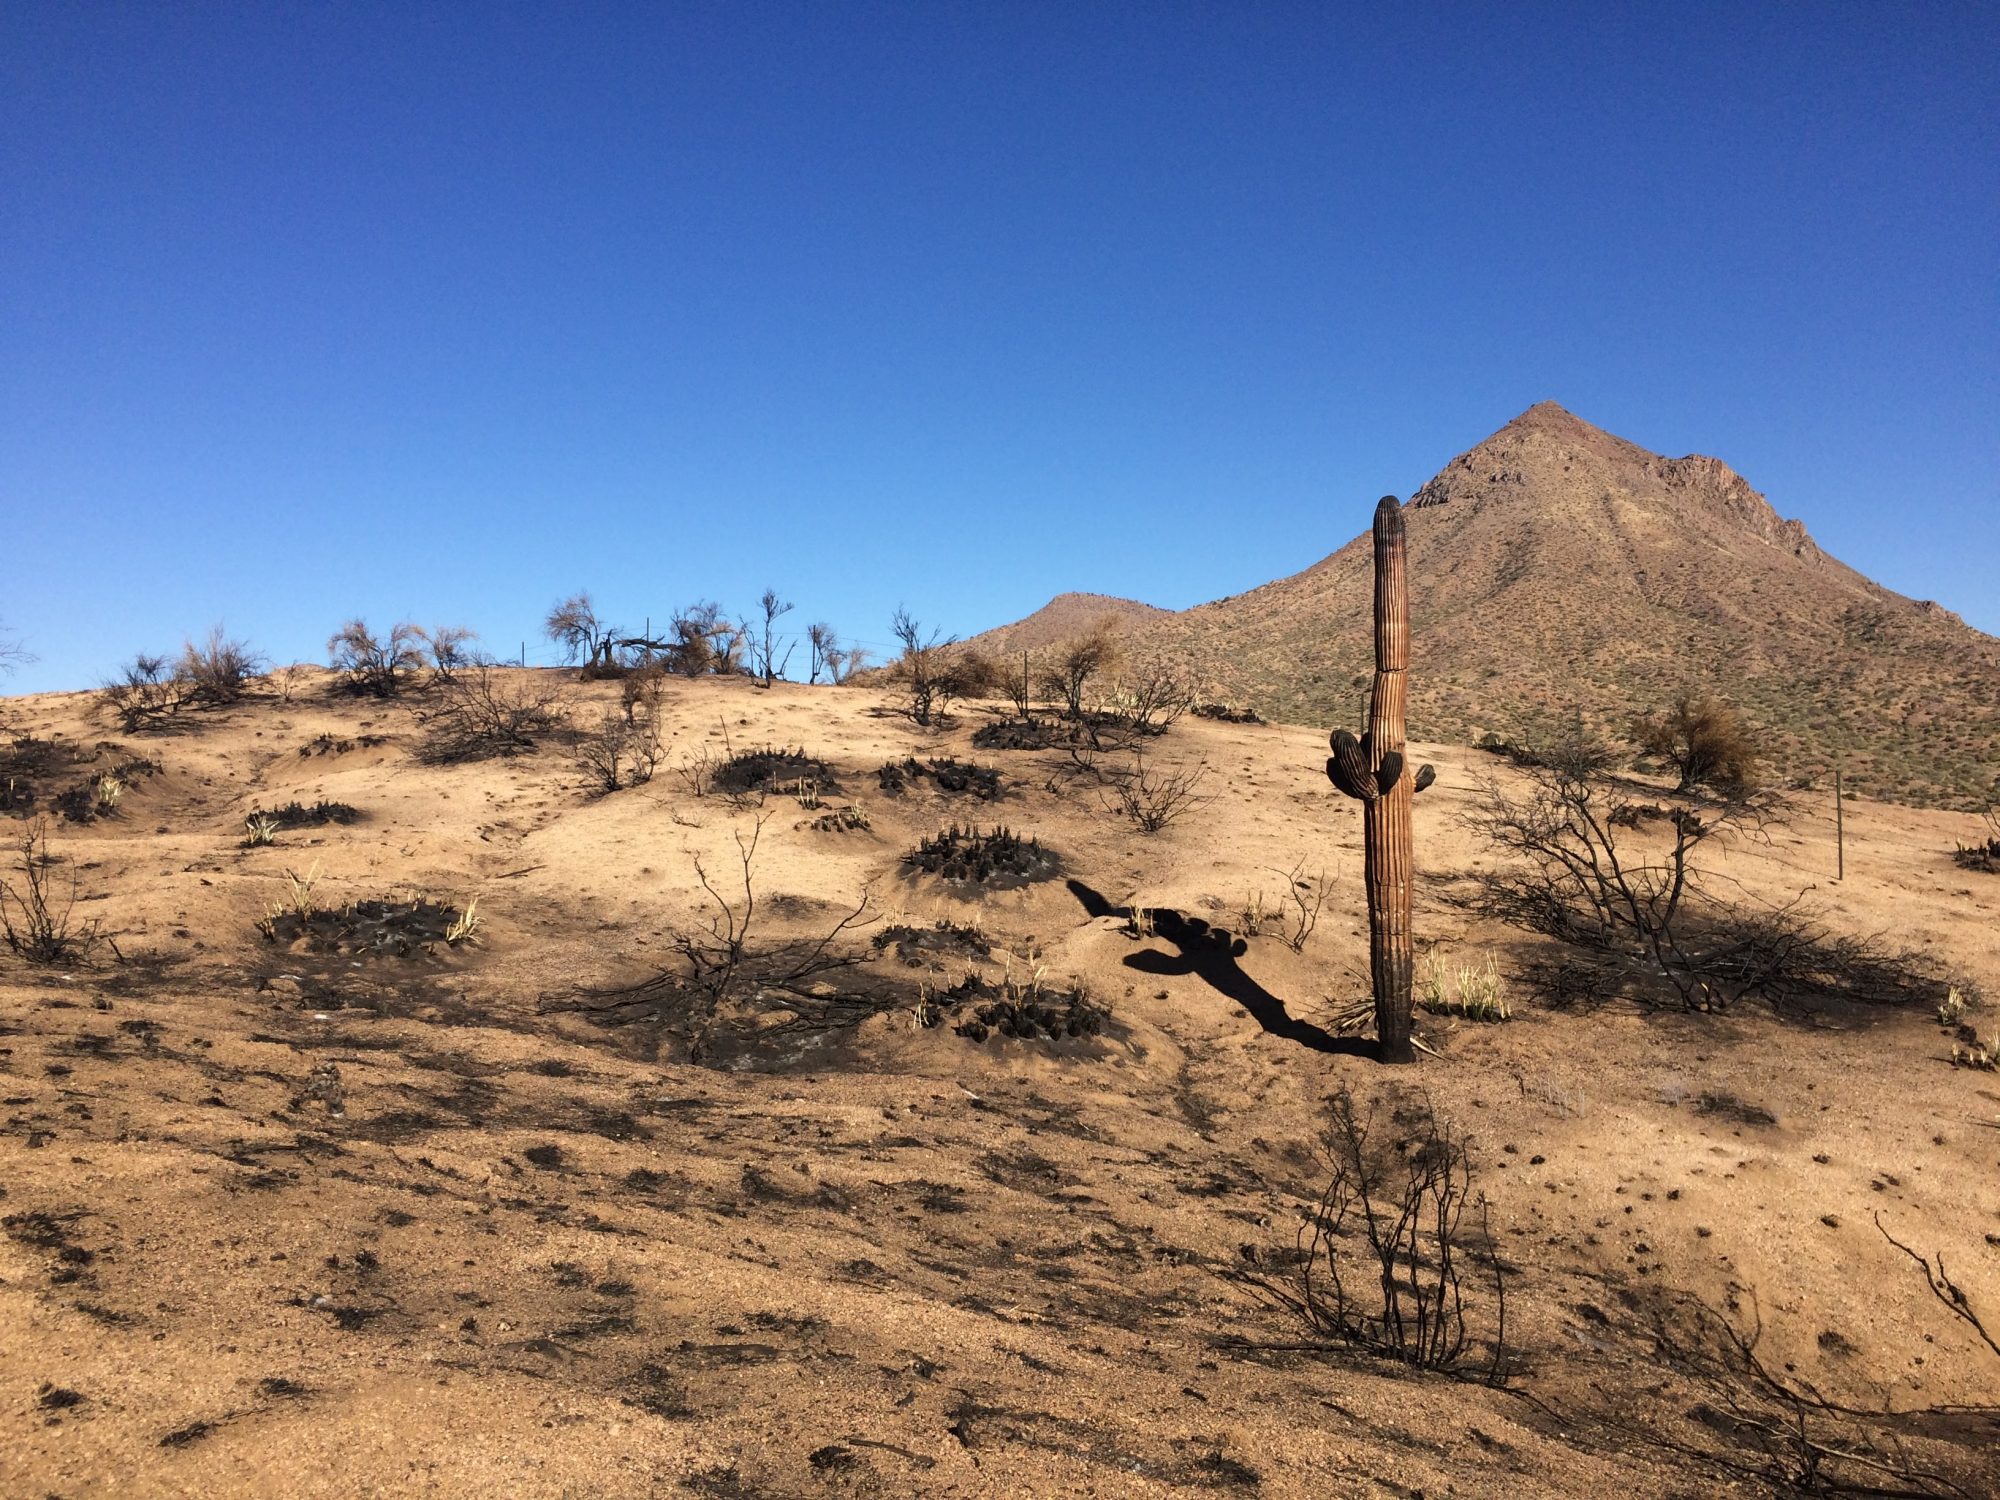 Sonoran desert post-fire with charred saguaro